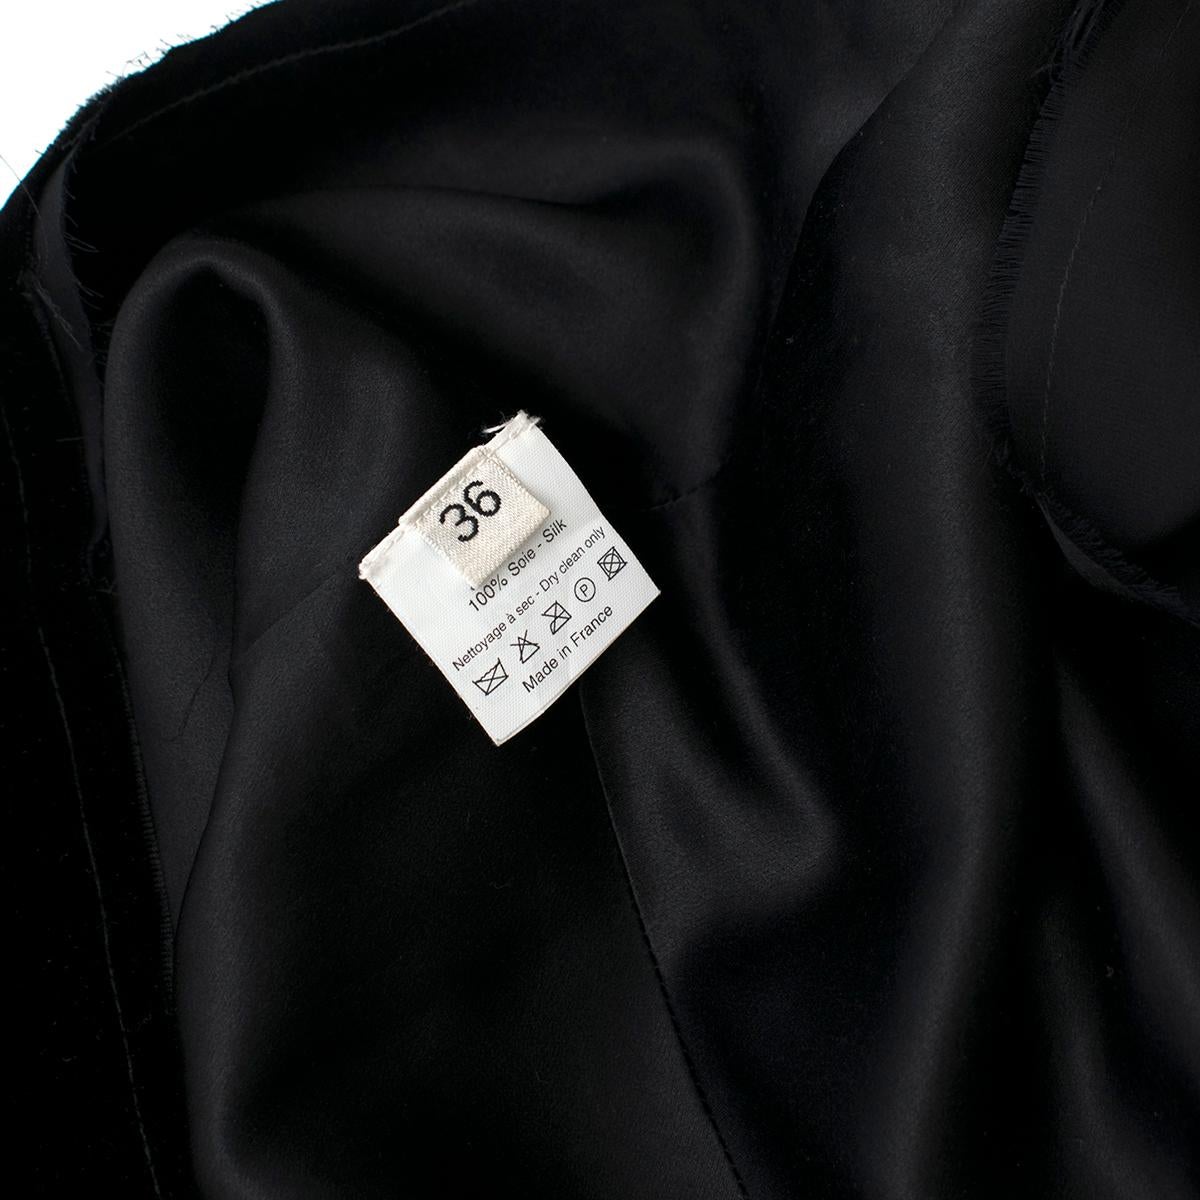 Lanvin by Alber Elbaz Black Velour Asymmetric Dress 36 FR For Sale 5